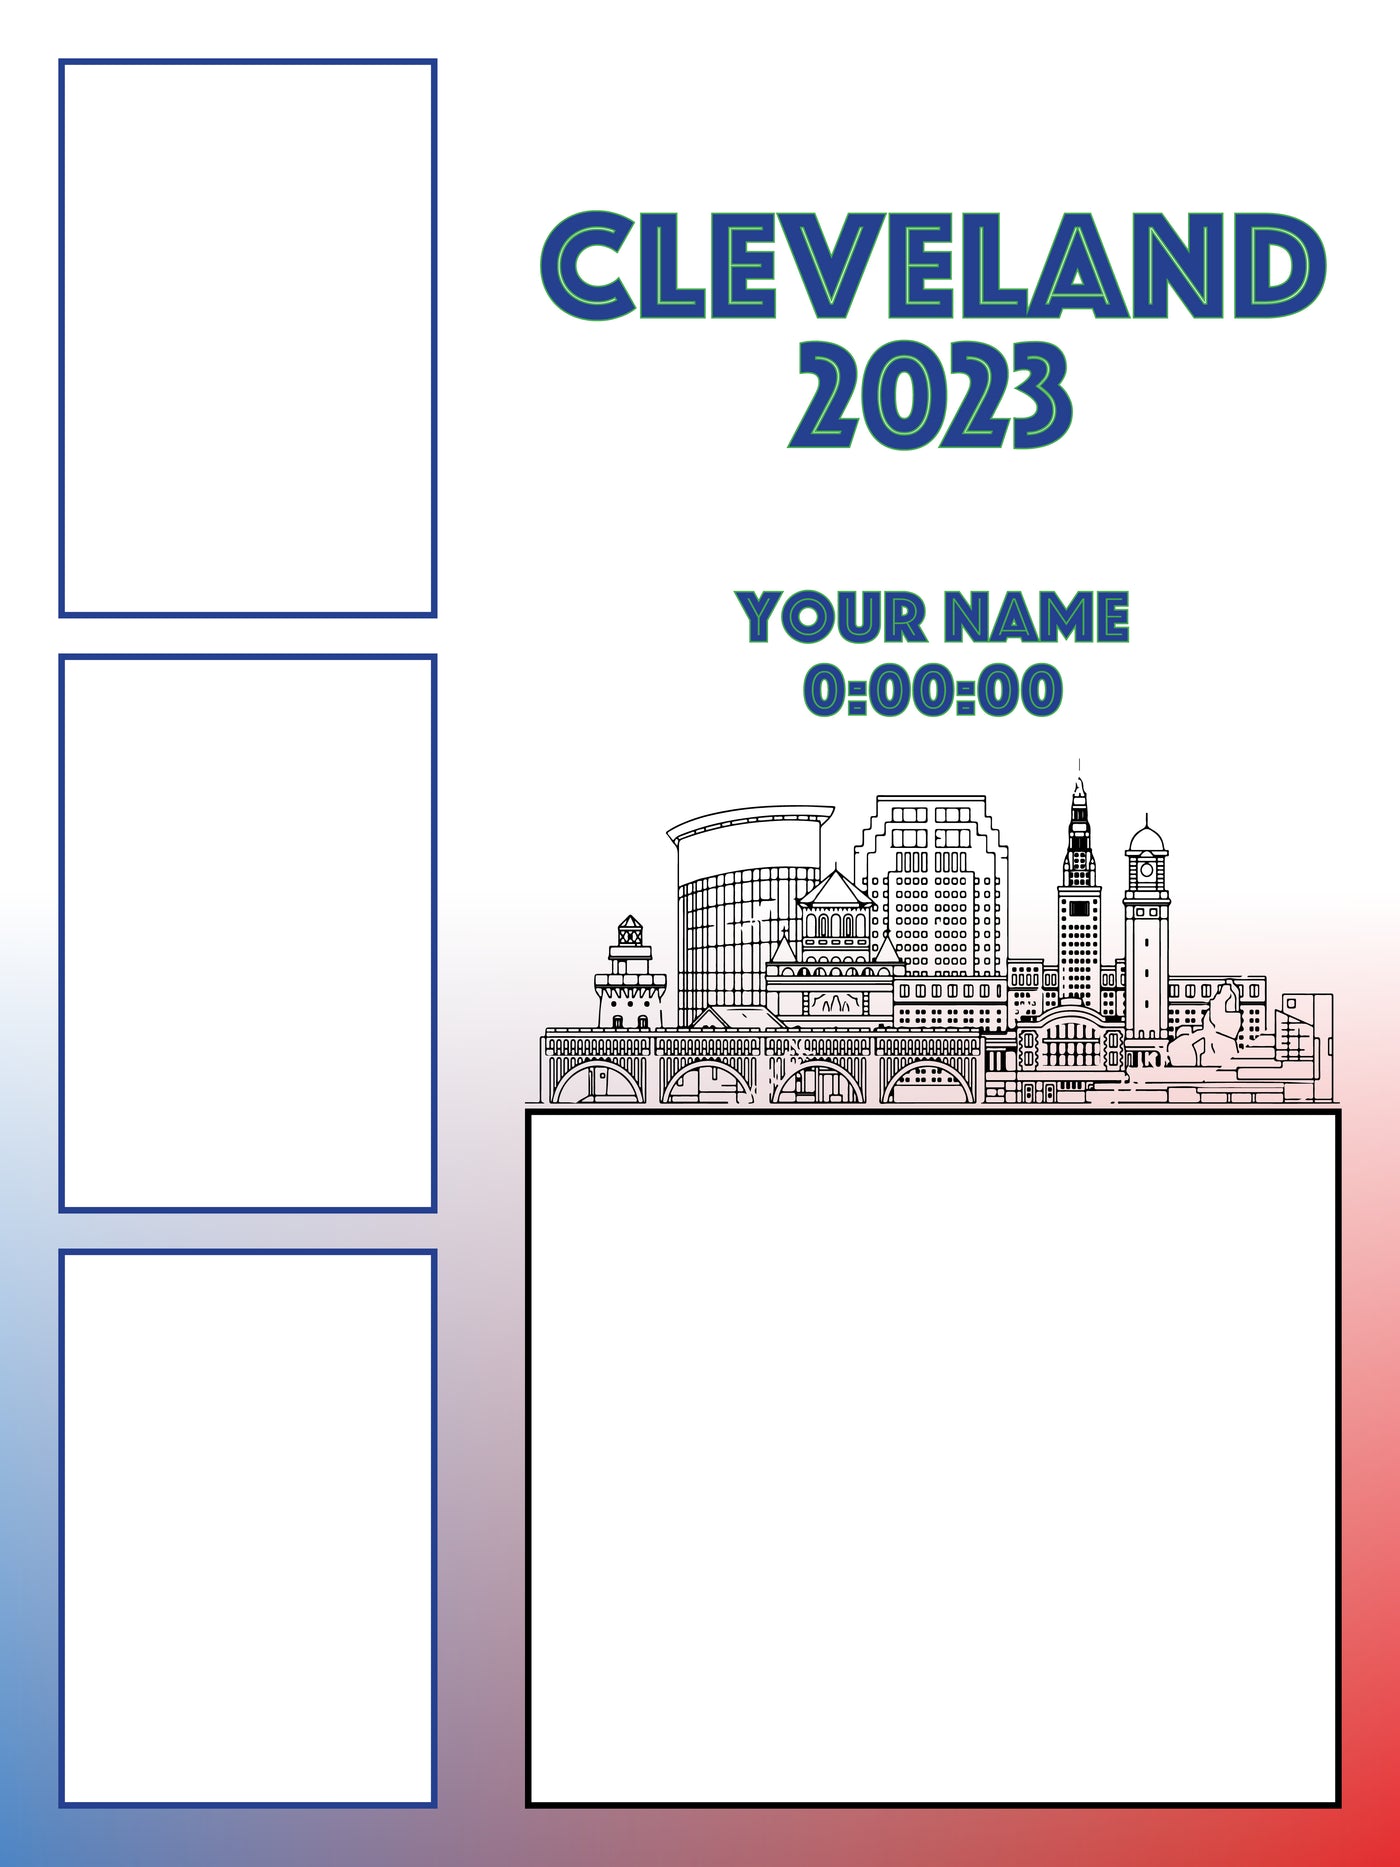 Cleveland 2023